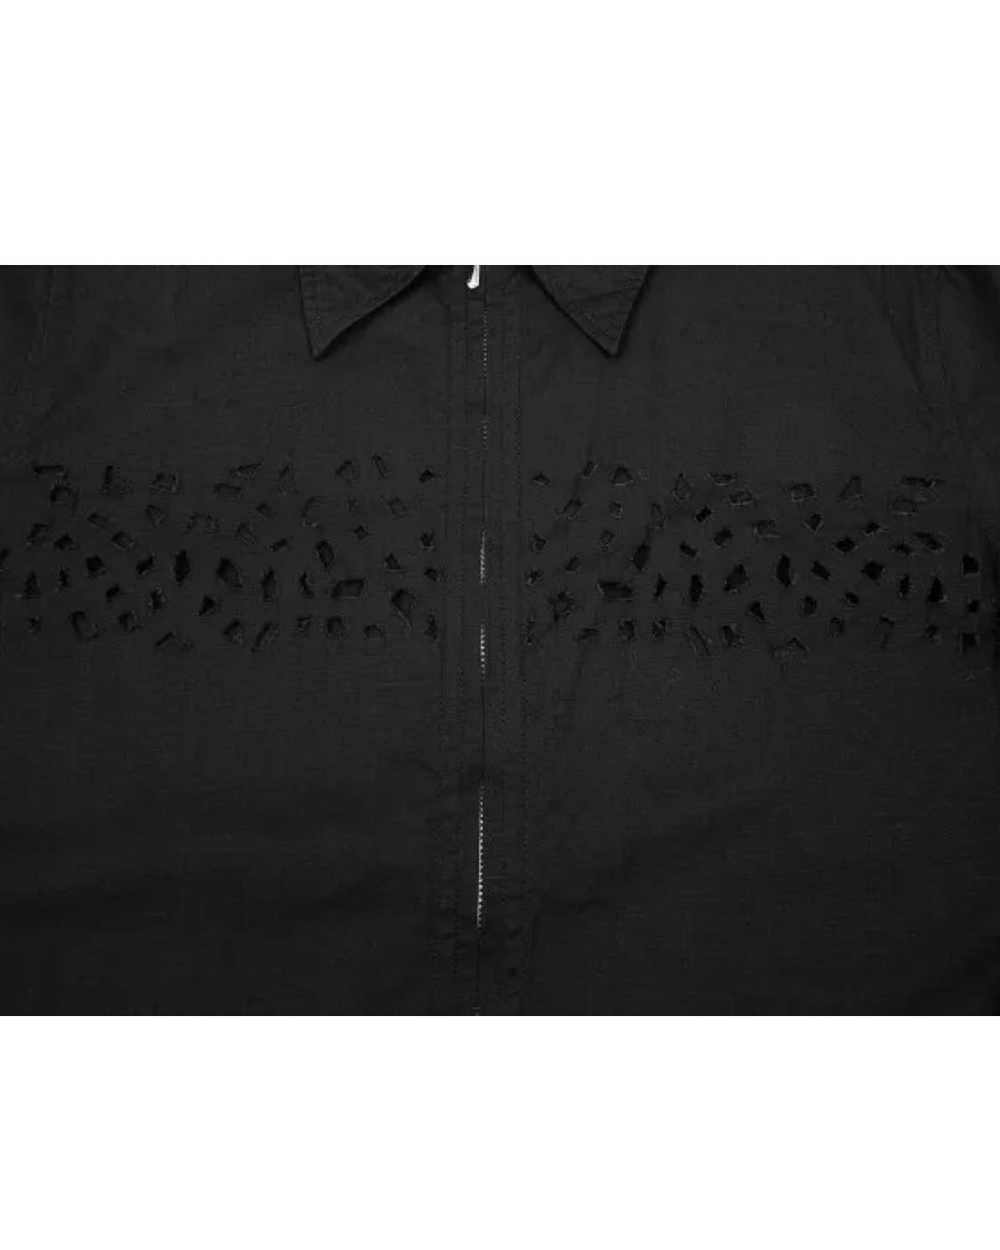 Jean Paul Gaultier Laser-Cut Zip-Up Shirt - image 5